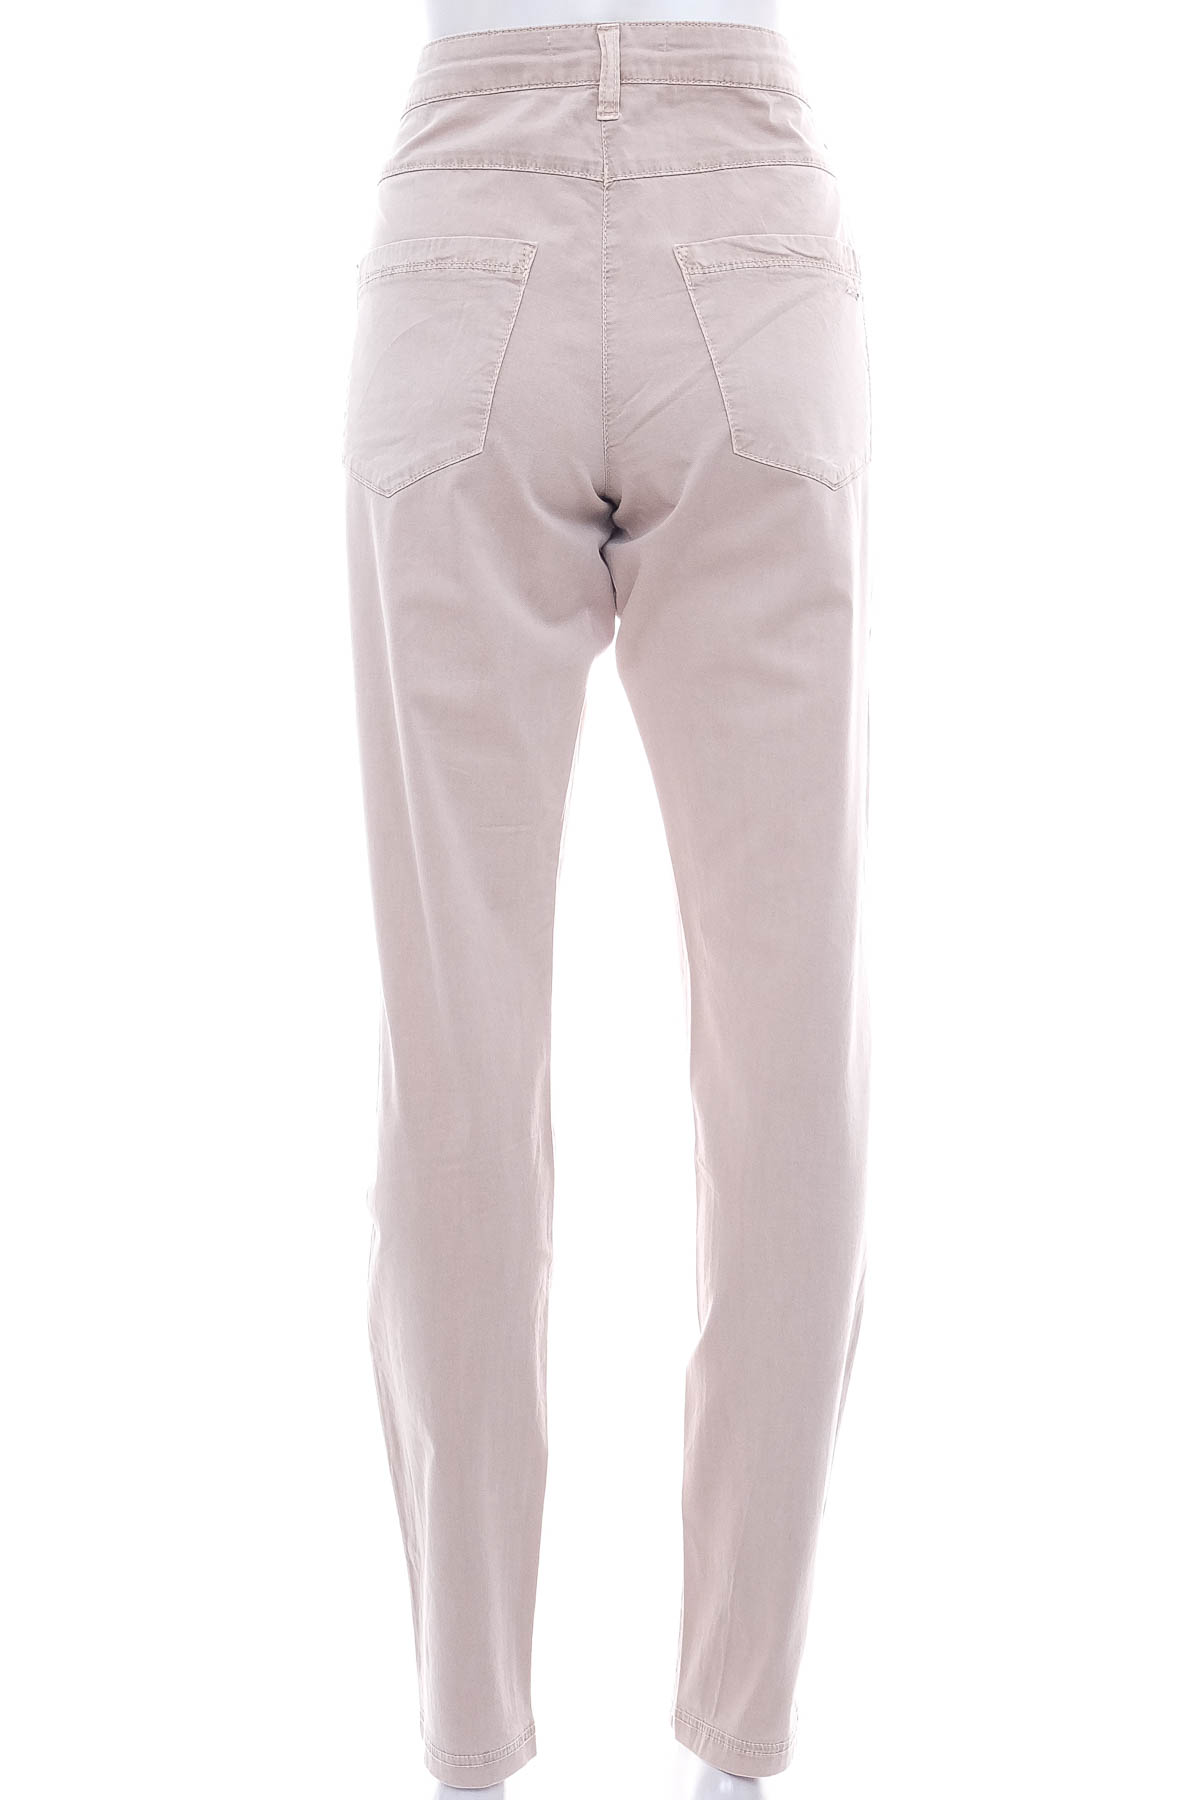 Women's trousers - MAC - 1